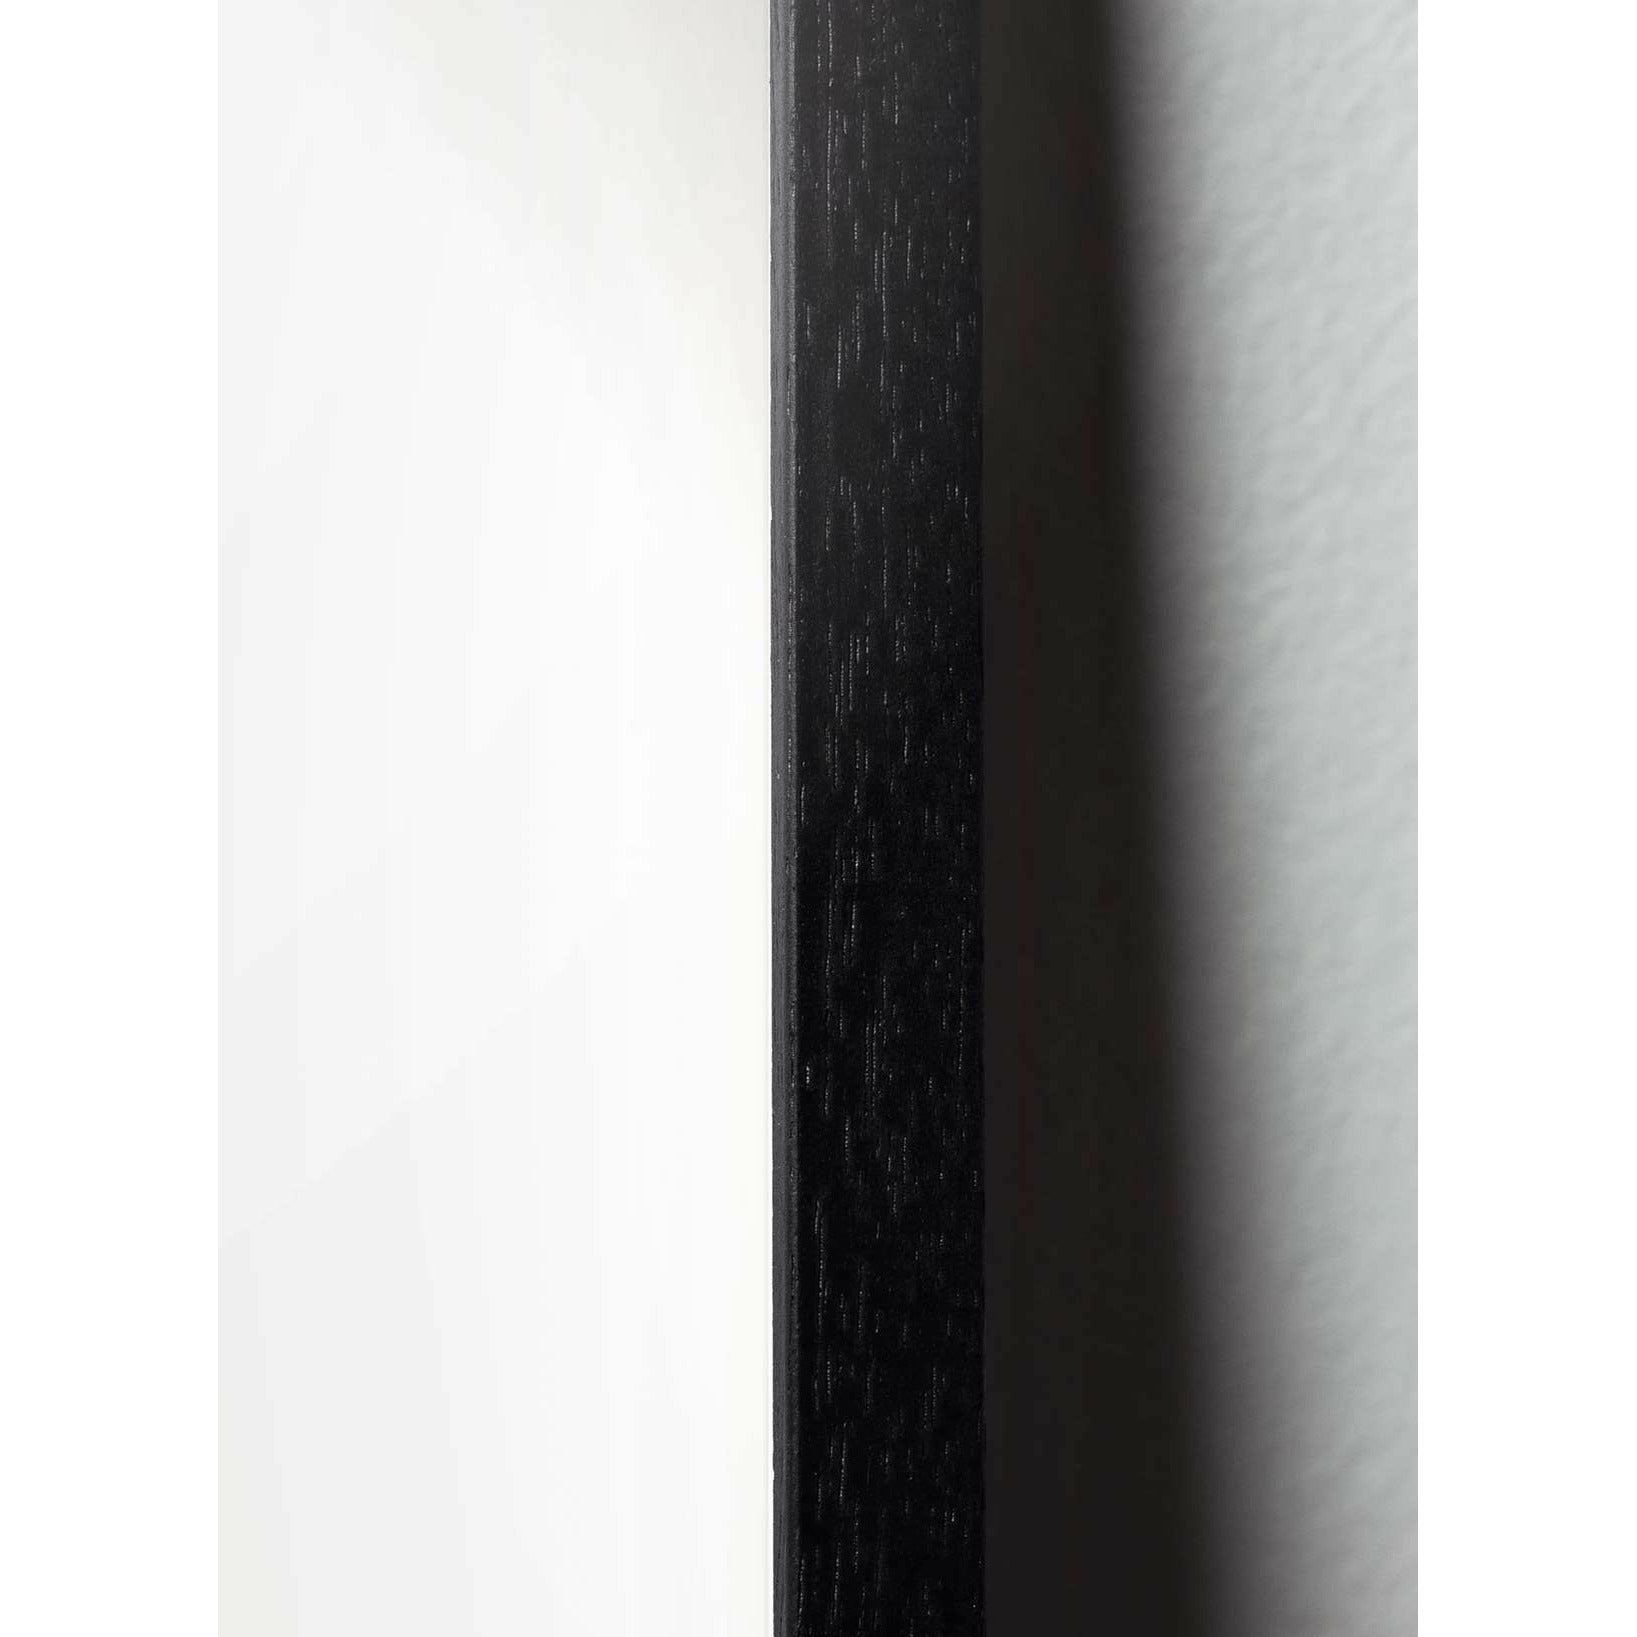 Póster de figuras de huevo de creación, marco hecho de madera lacada negra de 50x70 cm, marrón